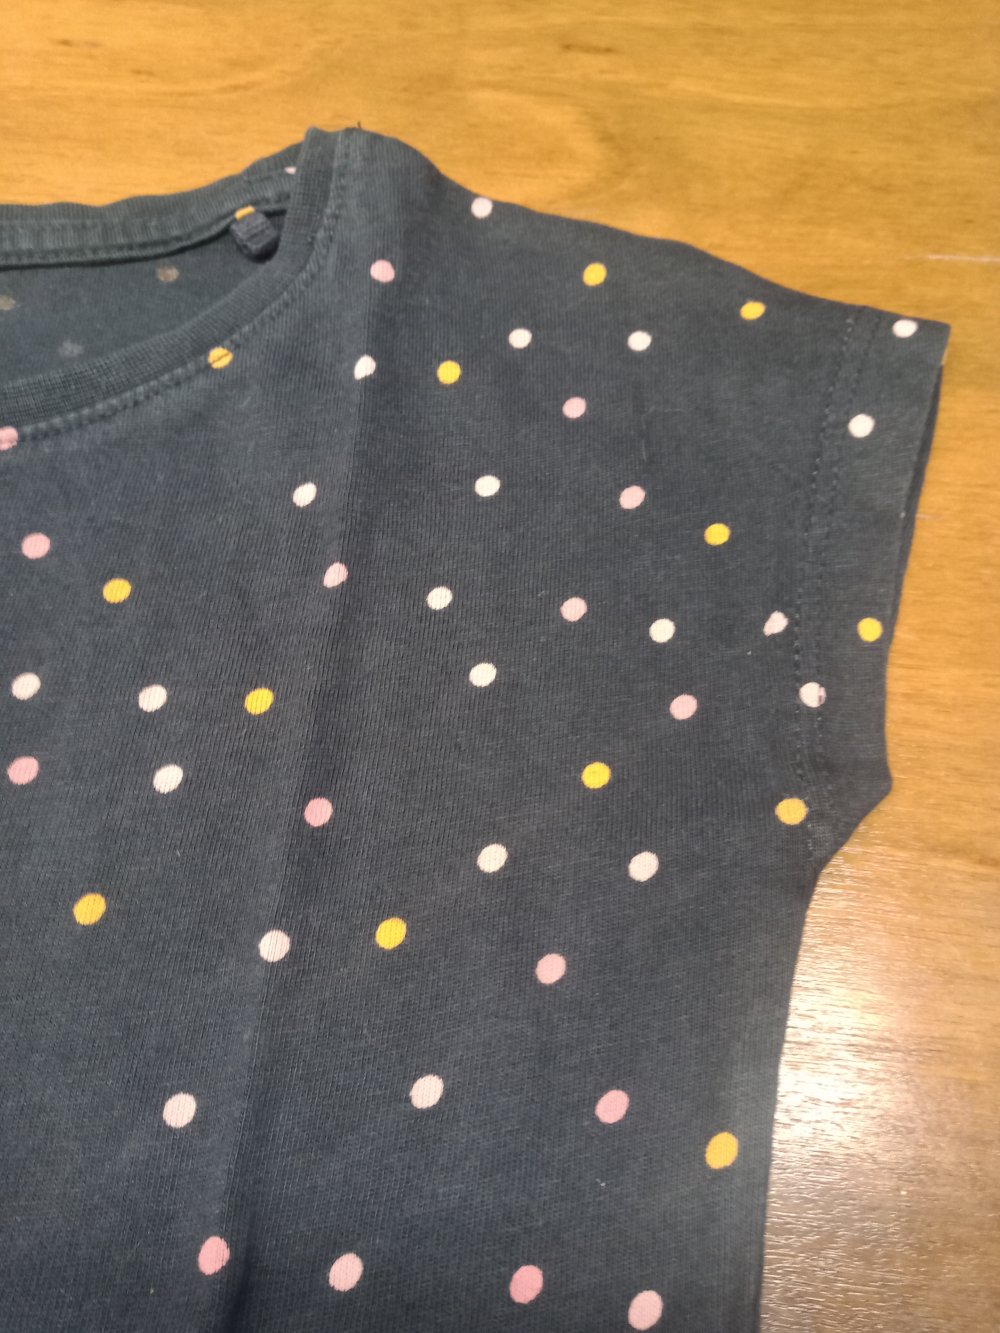 dunkelblaues T-Shirt mit rosa Punkten